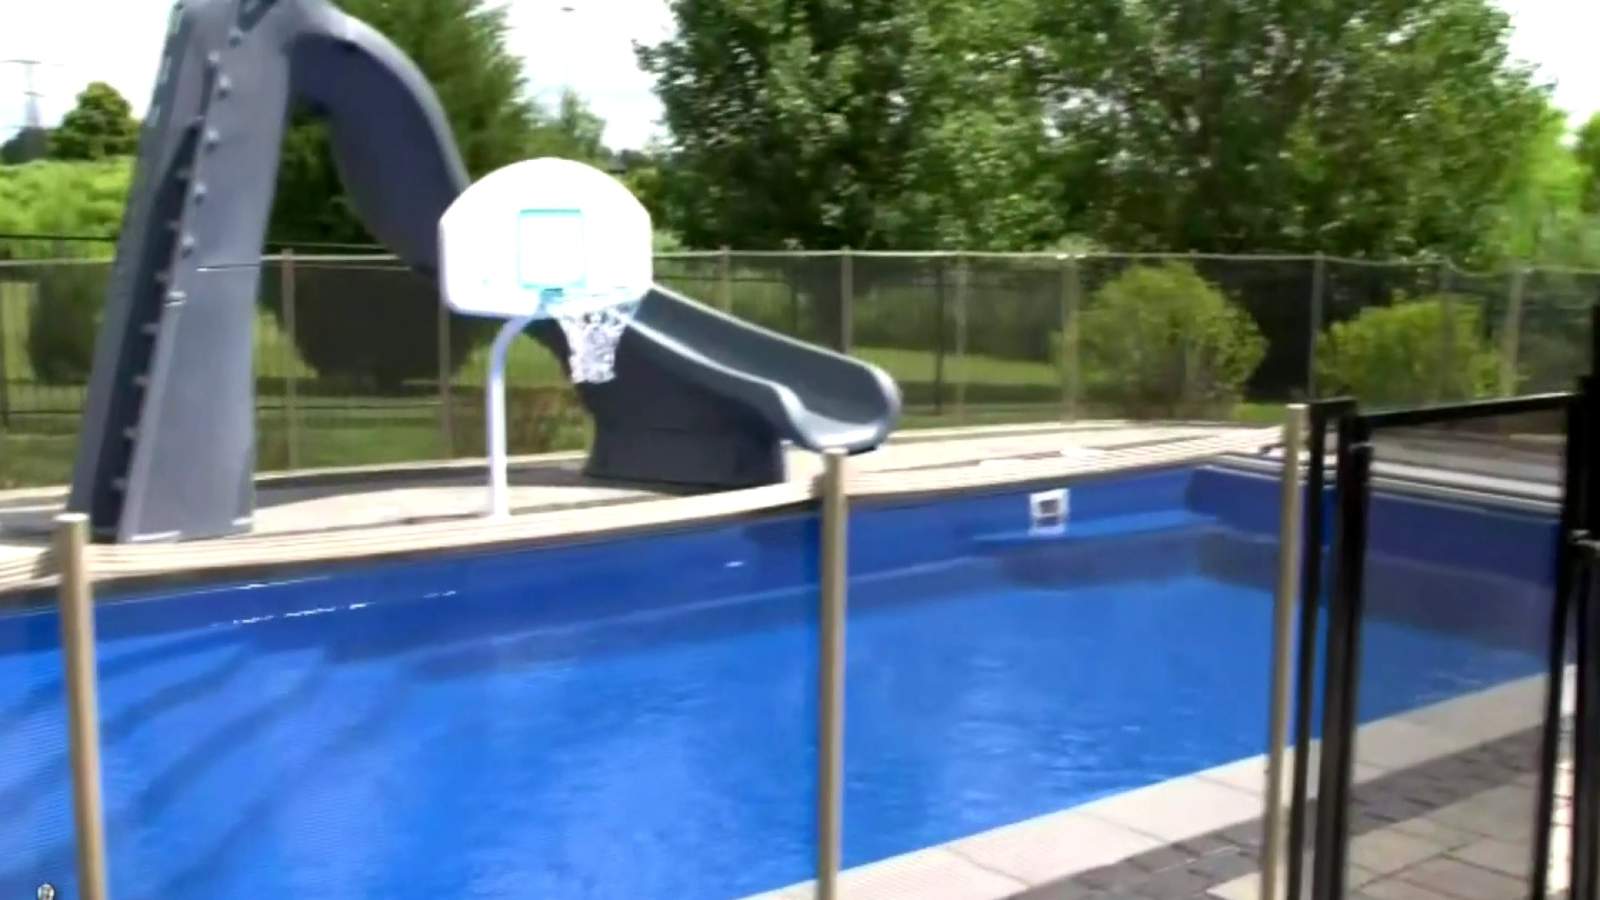 Pool popularity surges in Michigan: Warning to keep kids safe